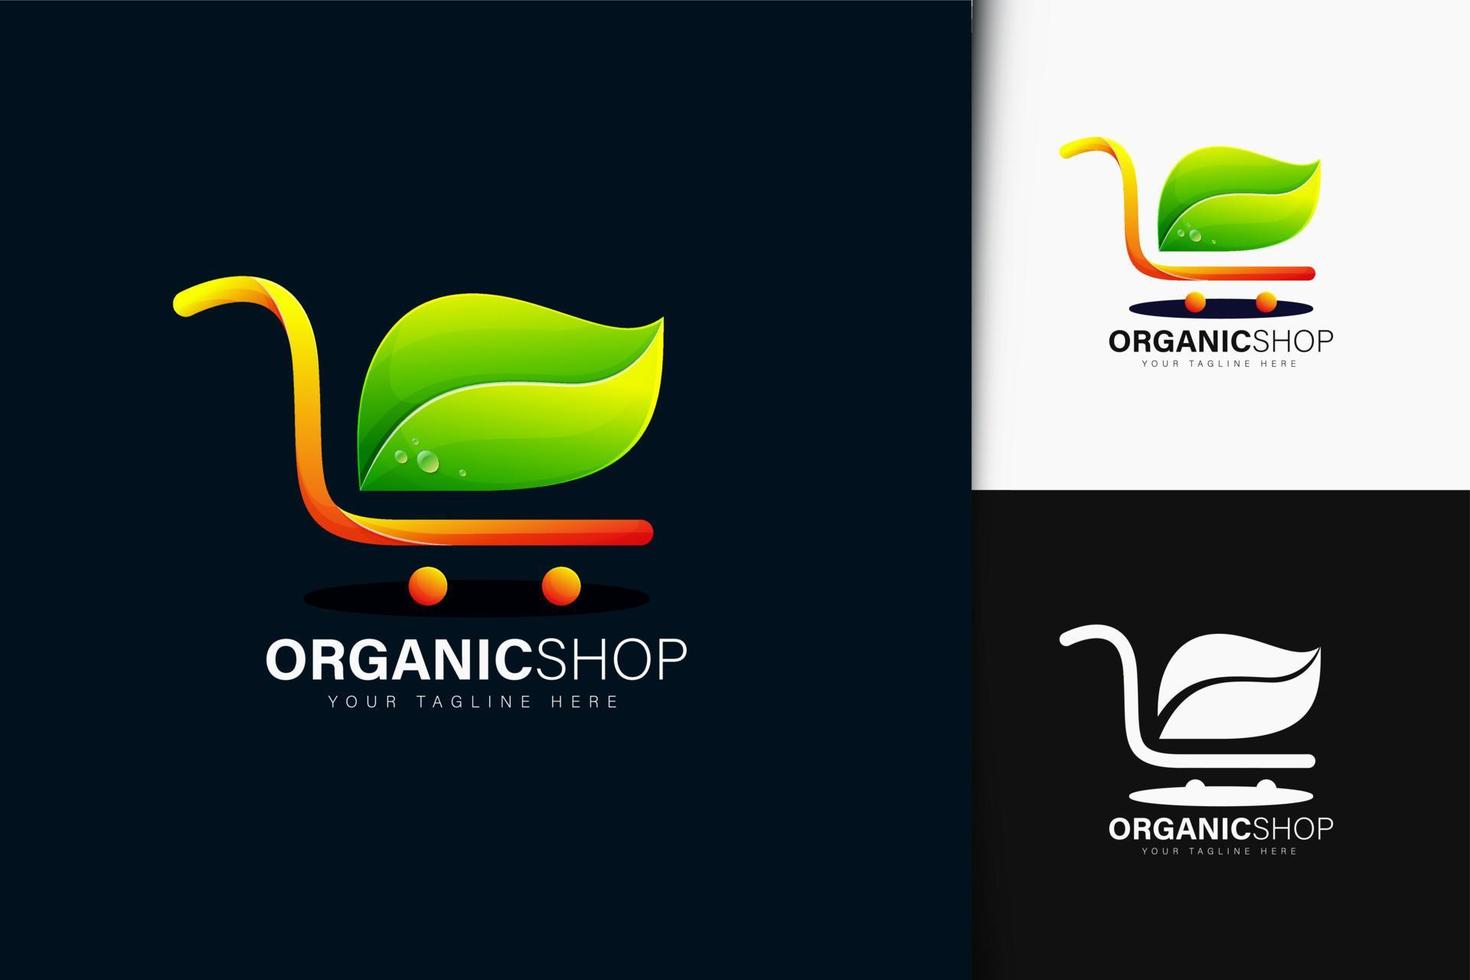 Organic shop logo design with gradient vector